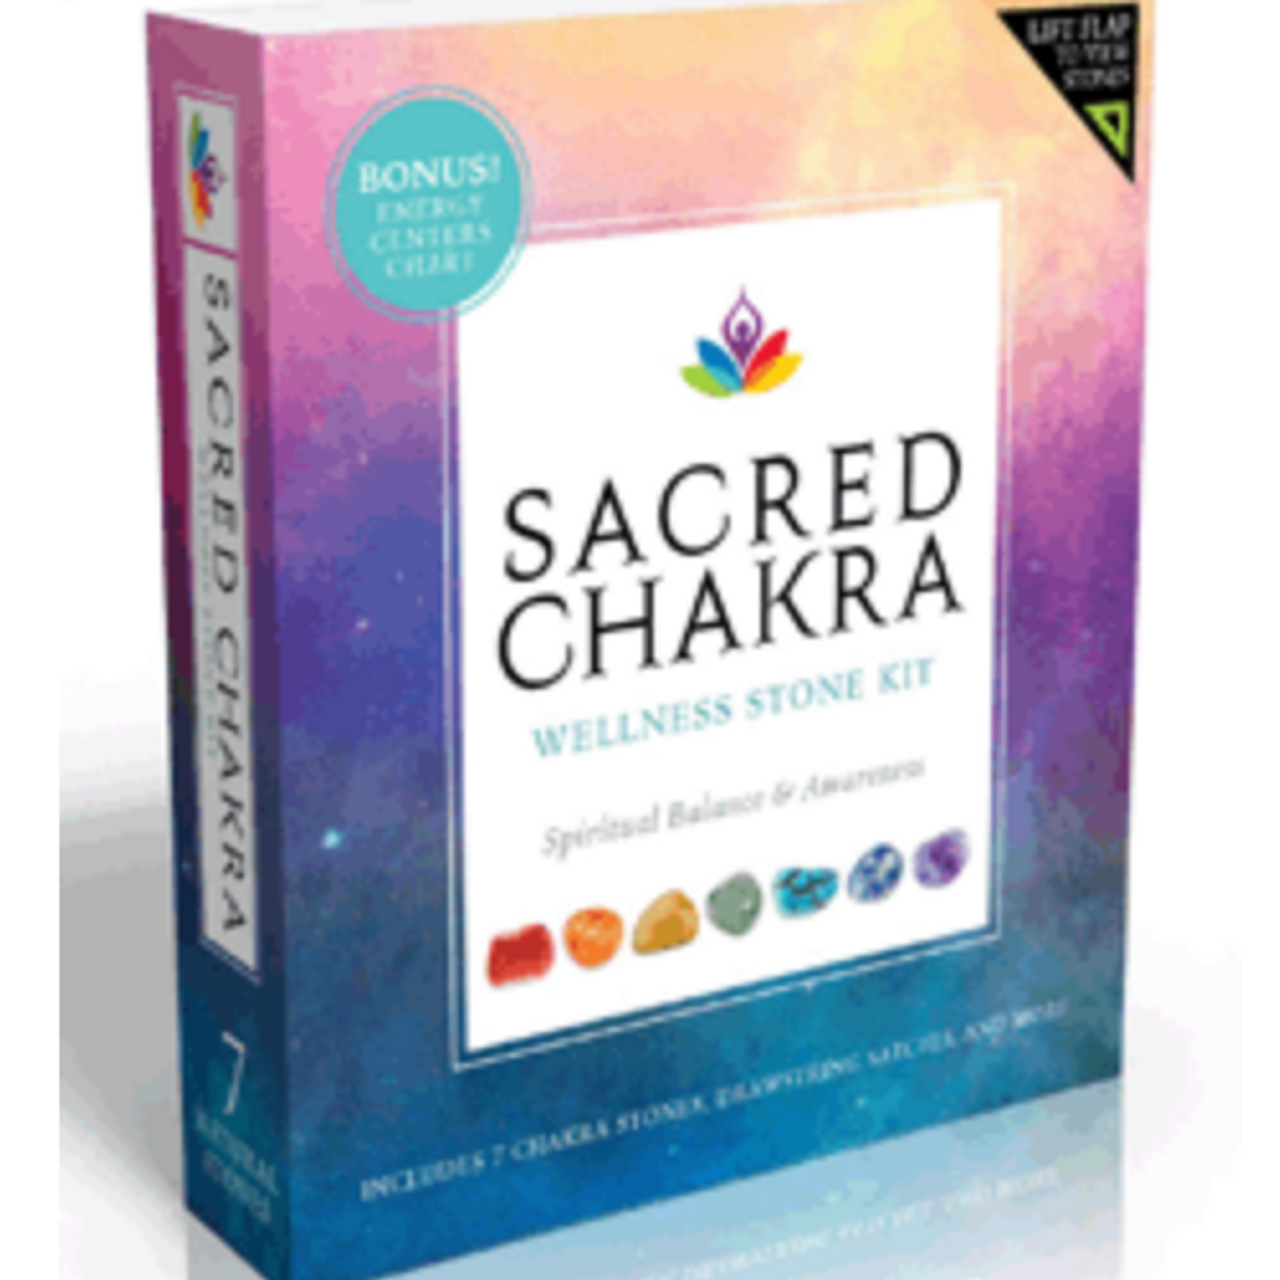 Chakra Sacred Wellness Stone Kit w/ Pouch and Chart